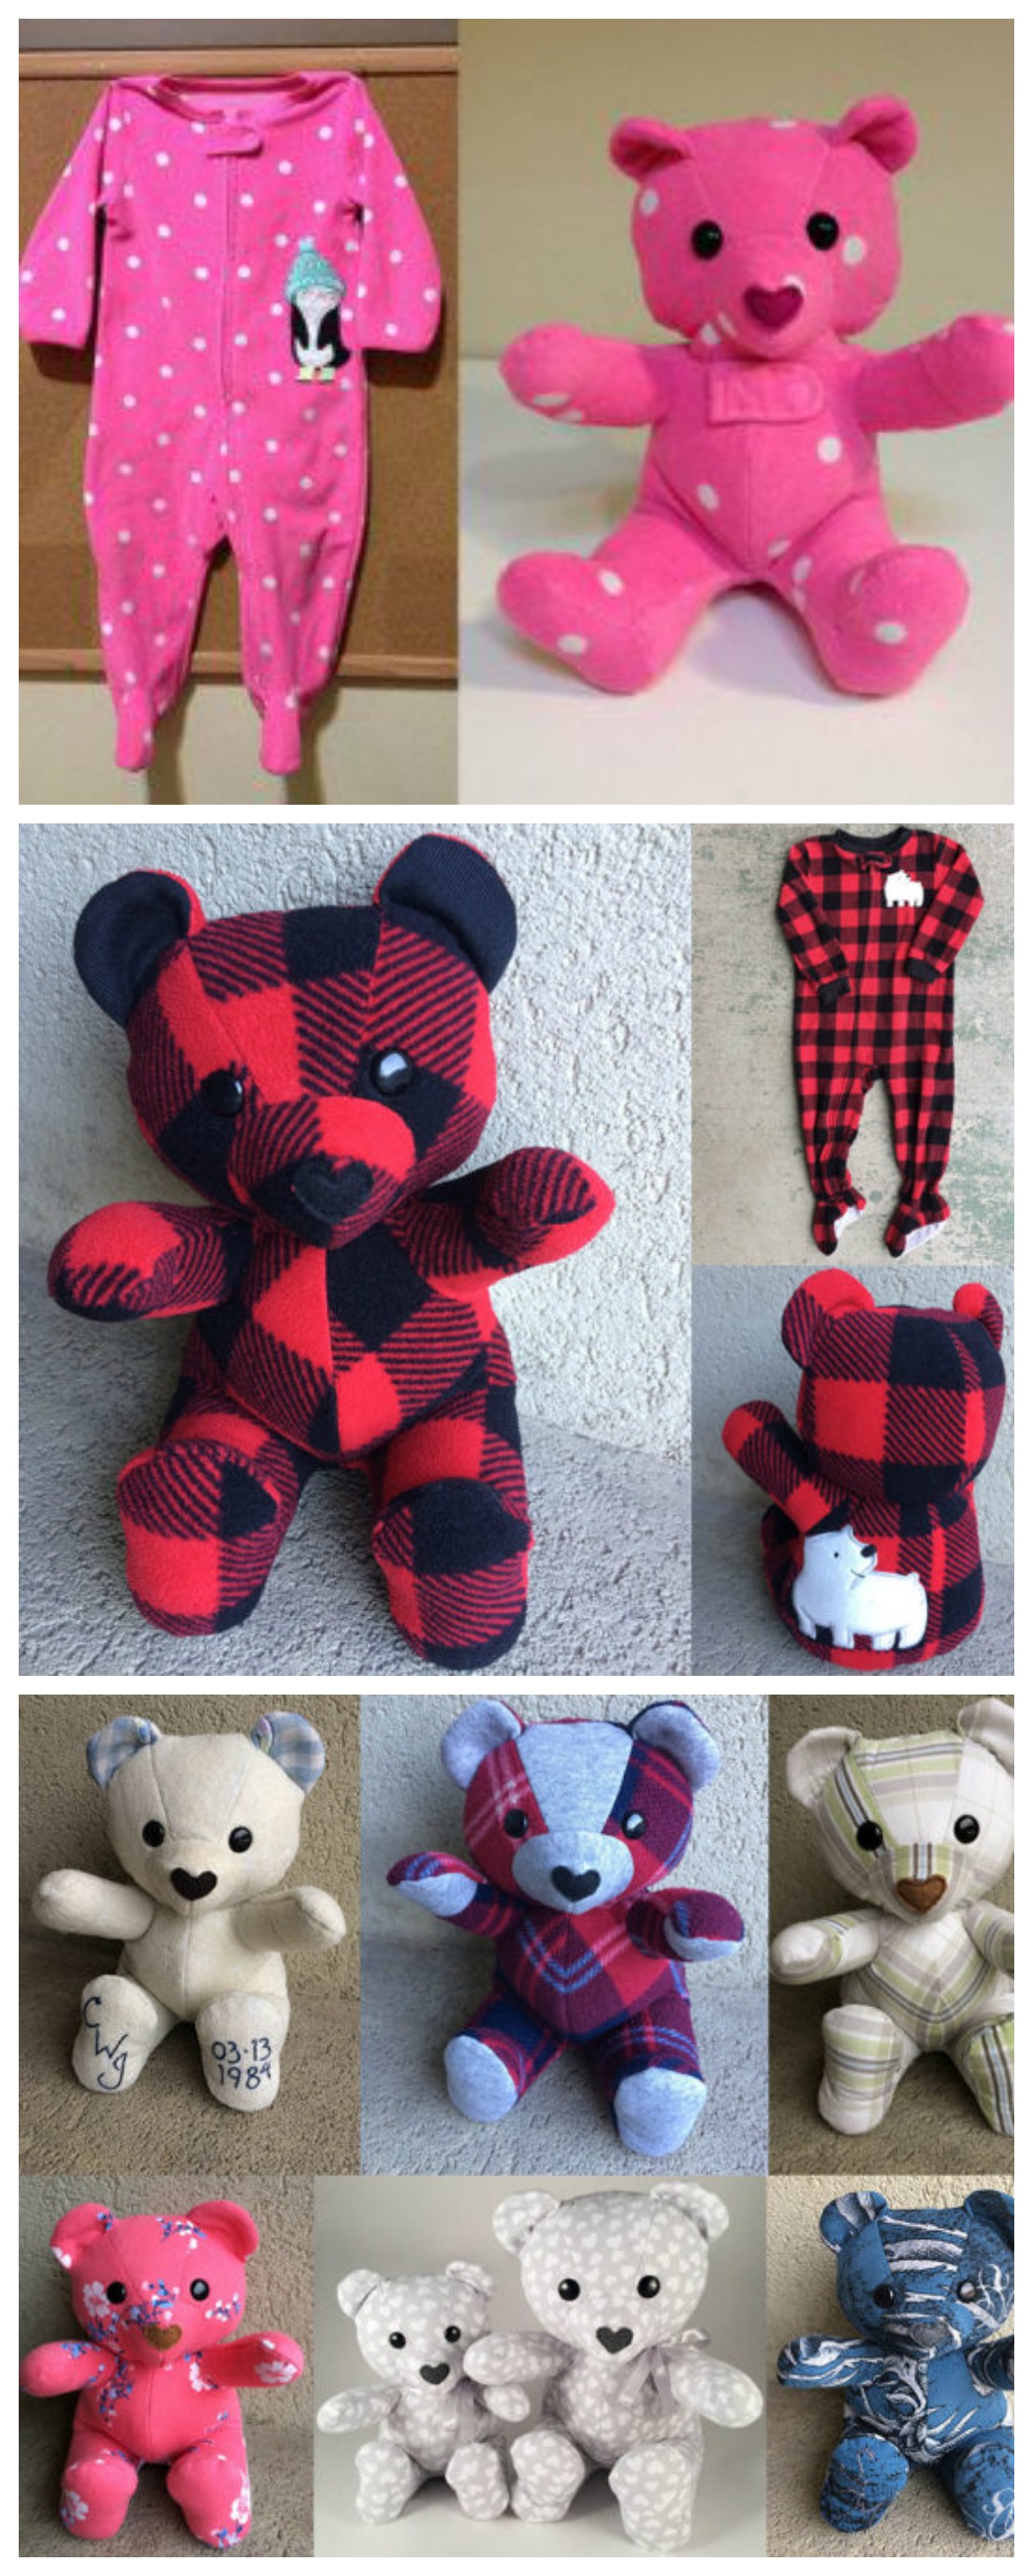 DIY Keepsake Memory Teddy Bear from Baby Clothes - DIY 4 EVER